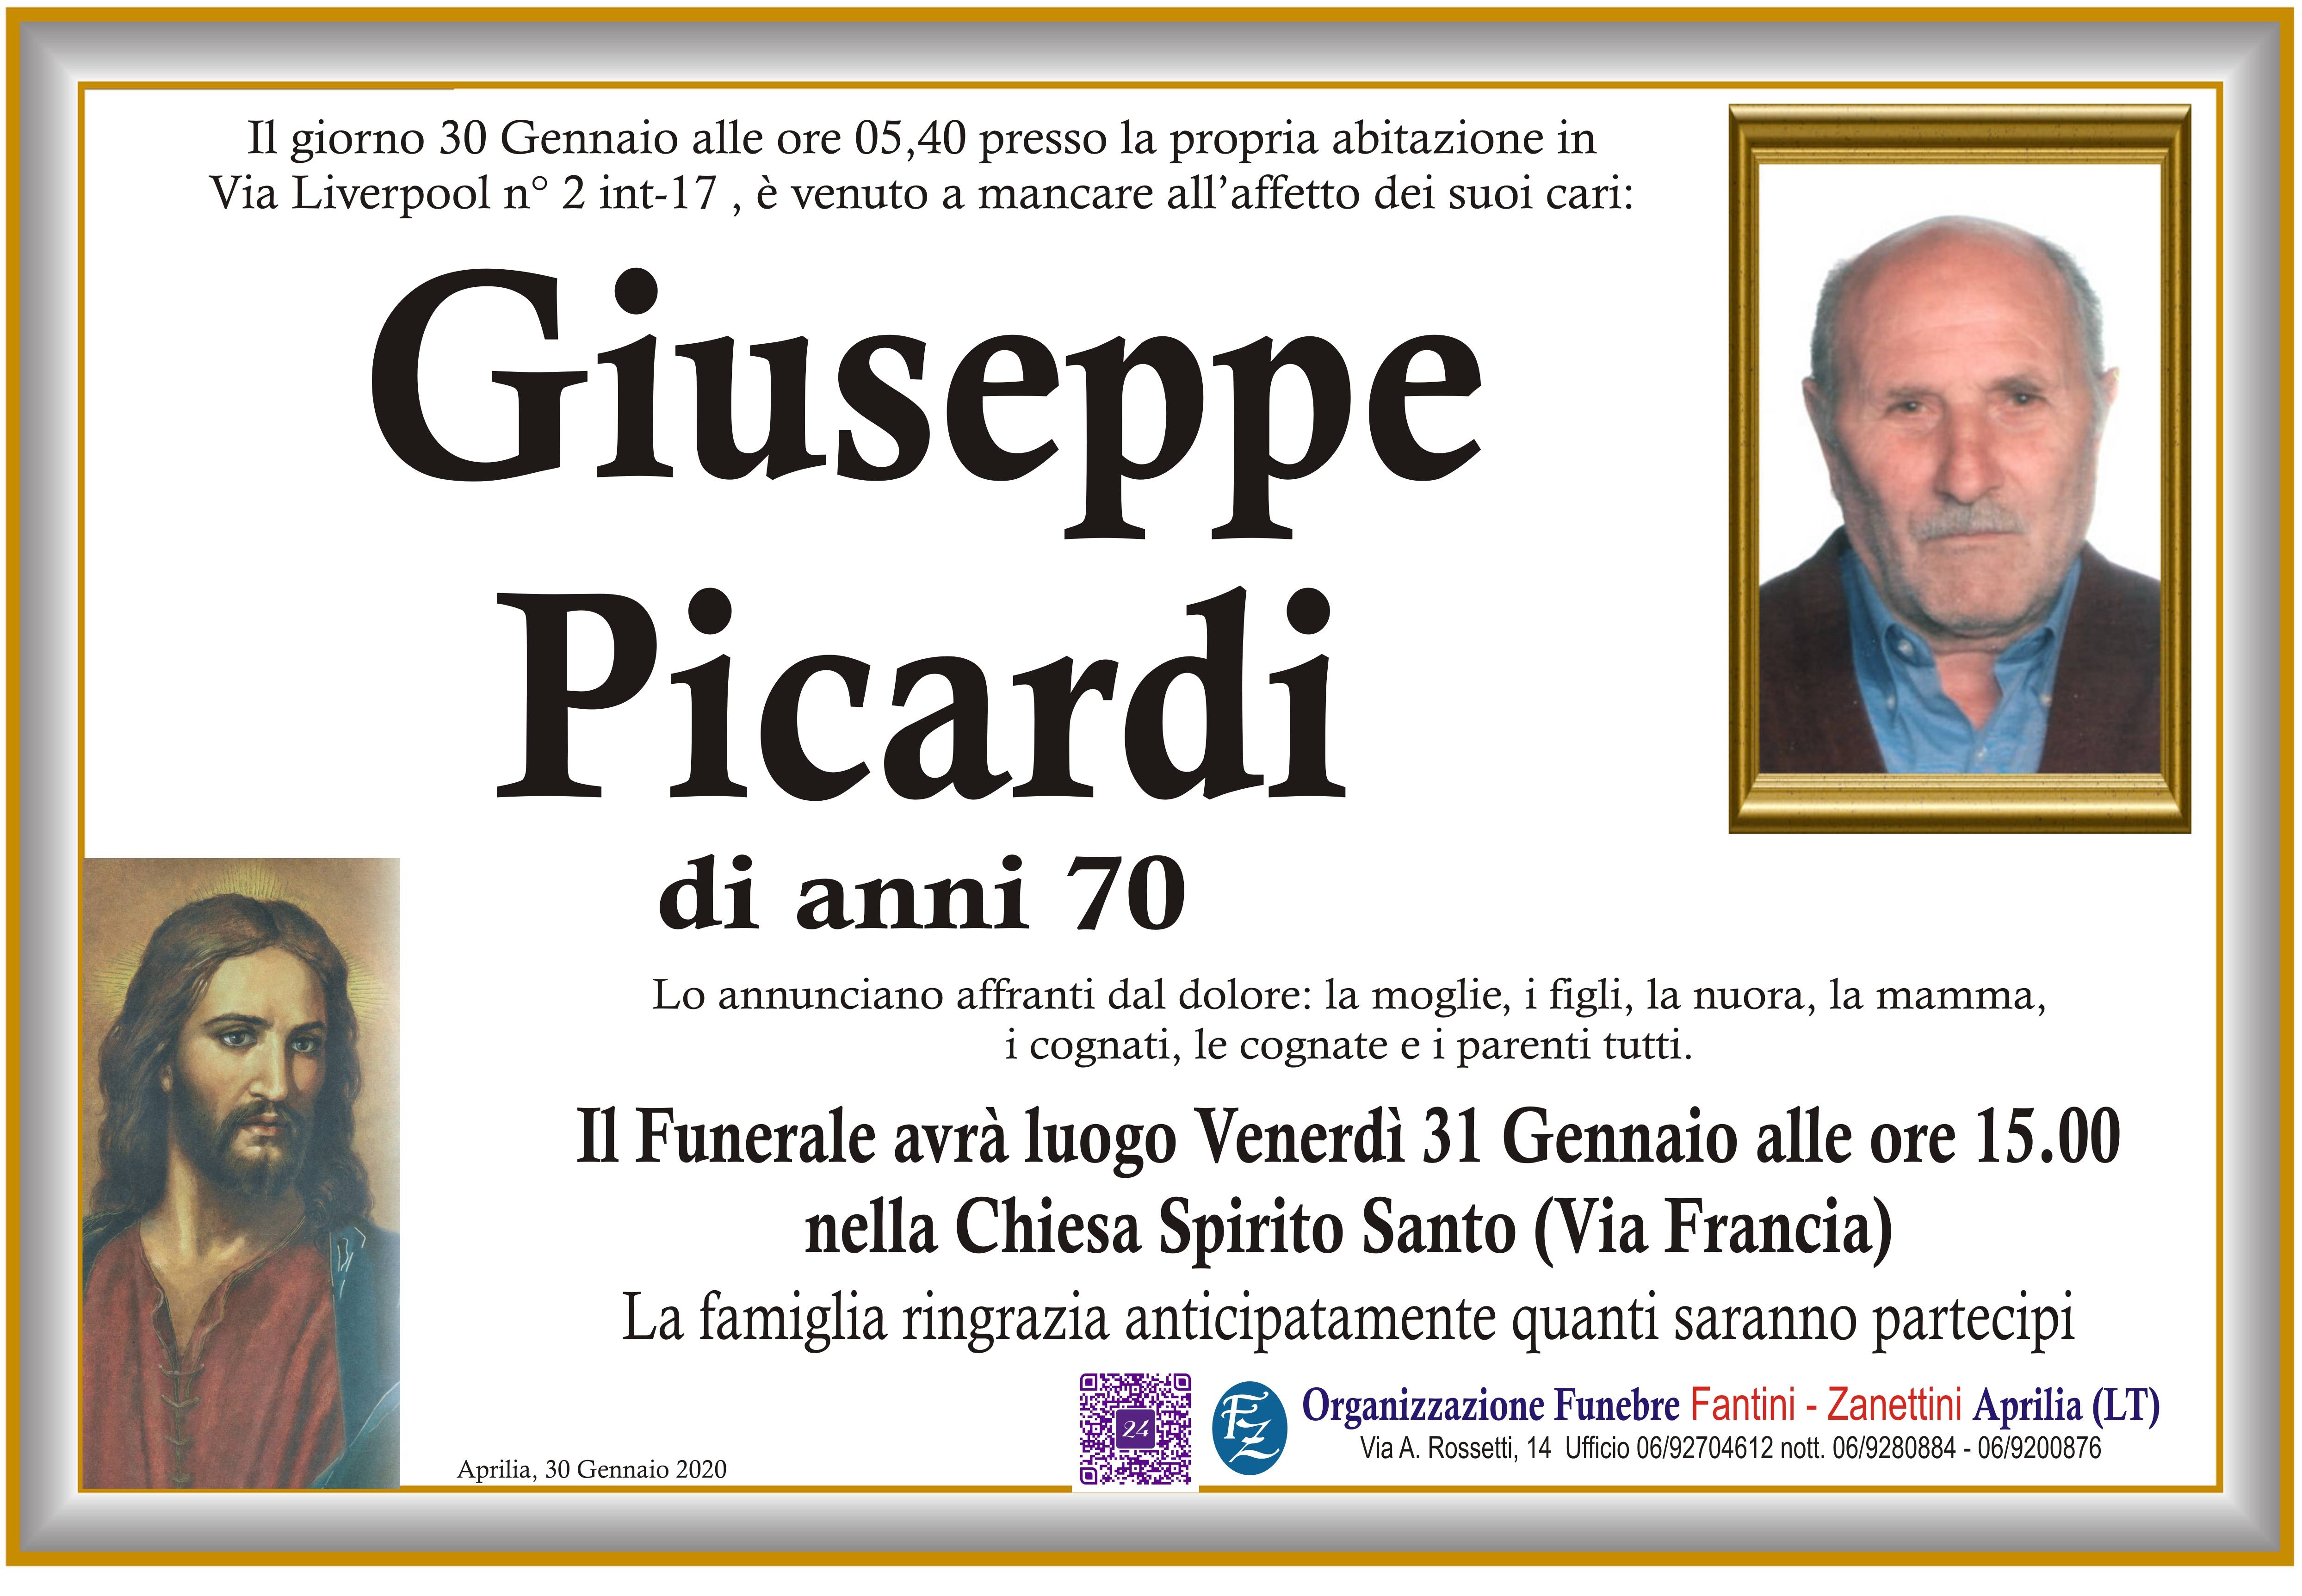 Giuseppe Picardi